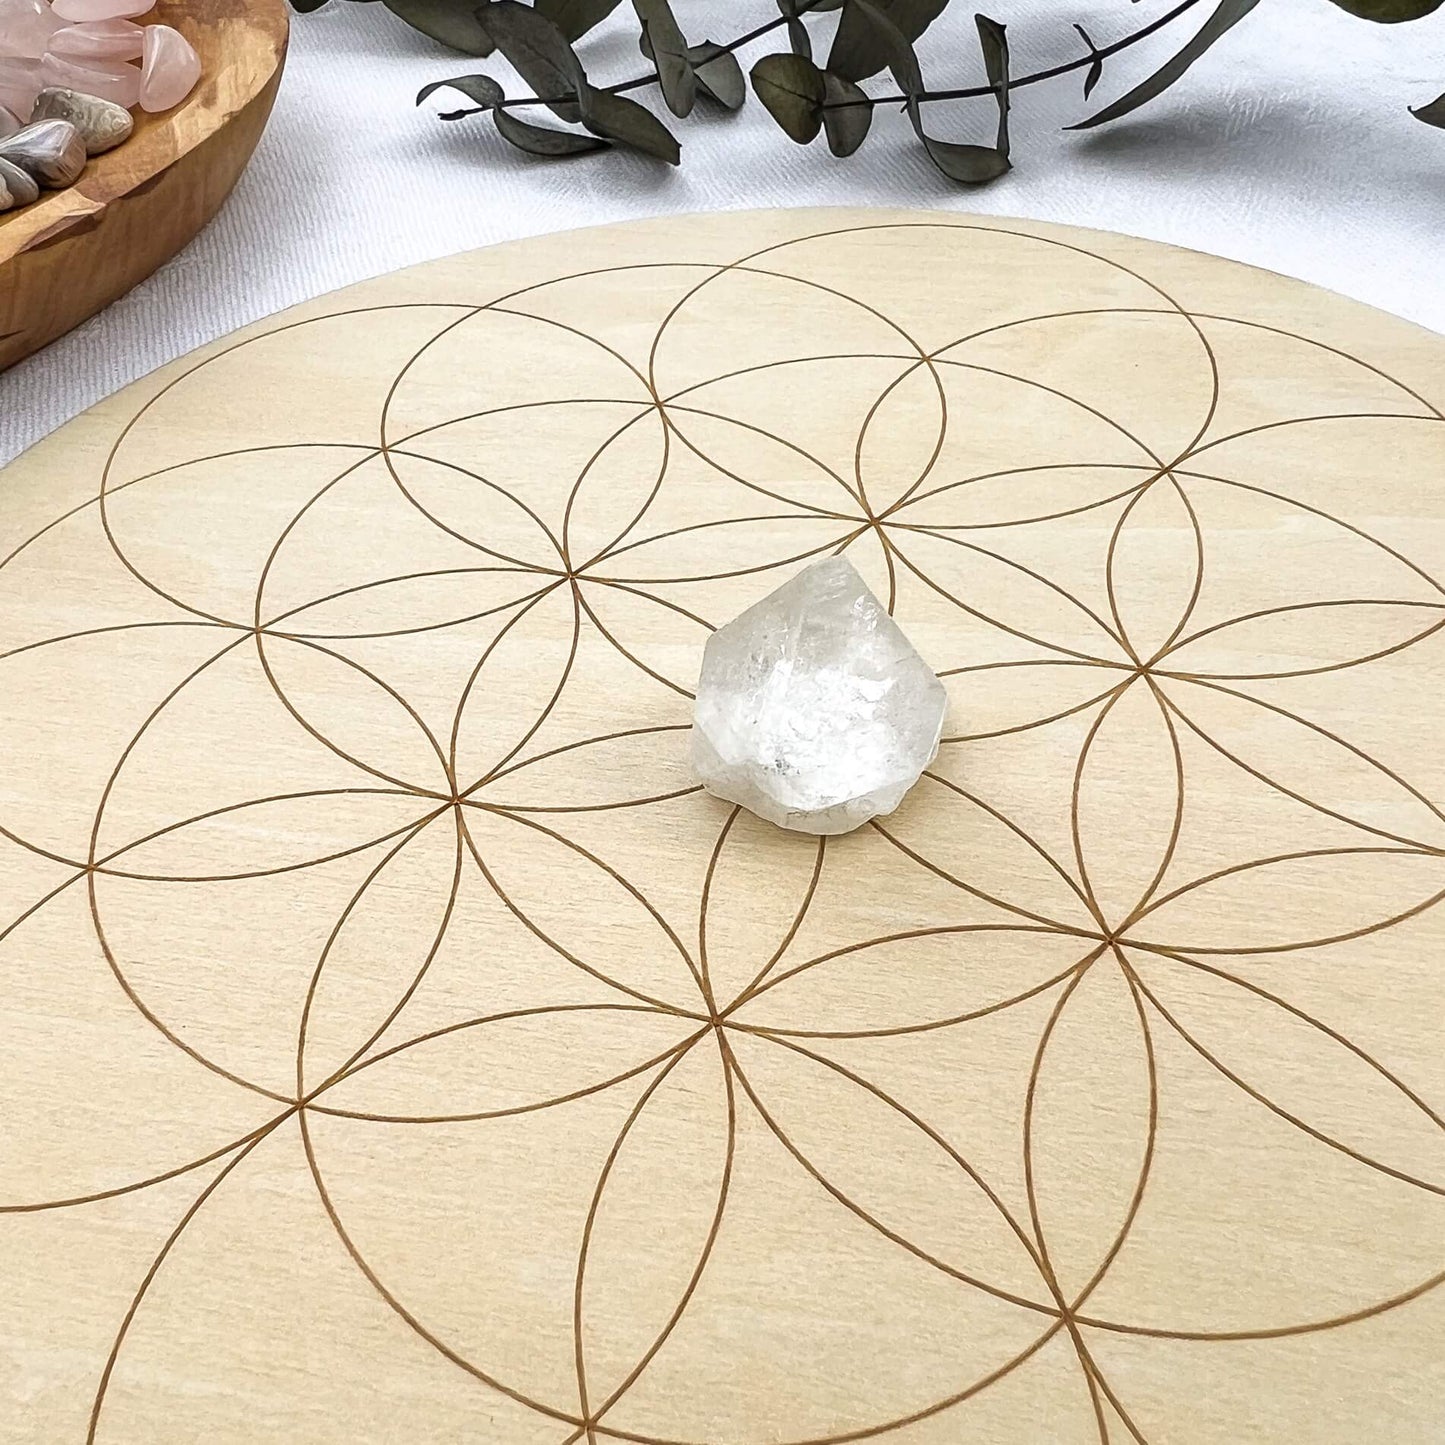 Crystal Grid Board - Flower of Life